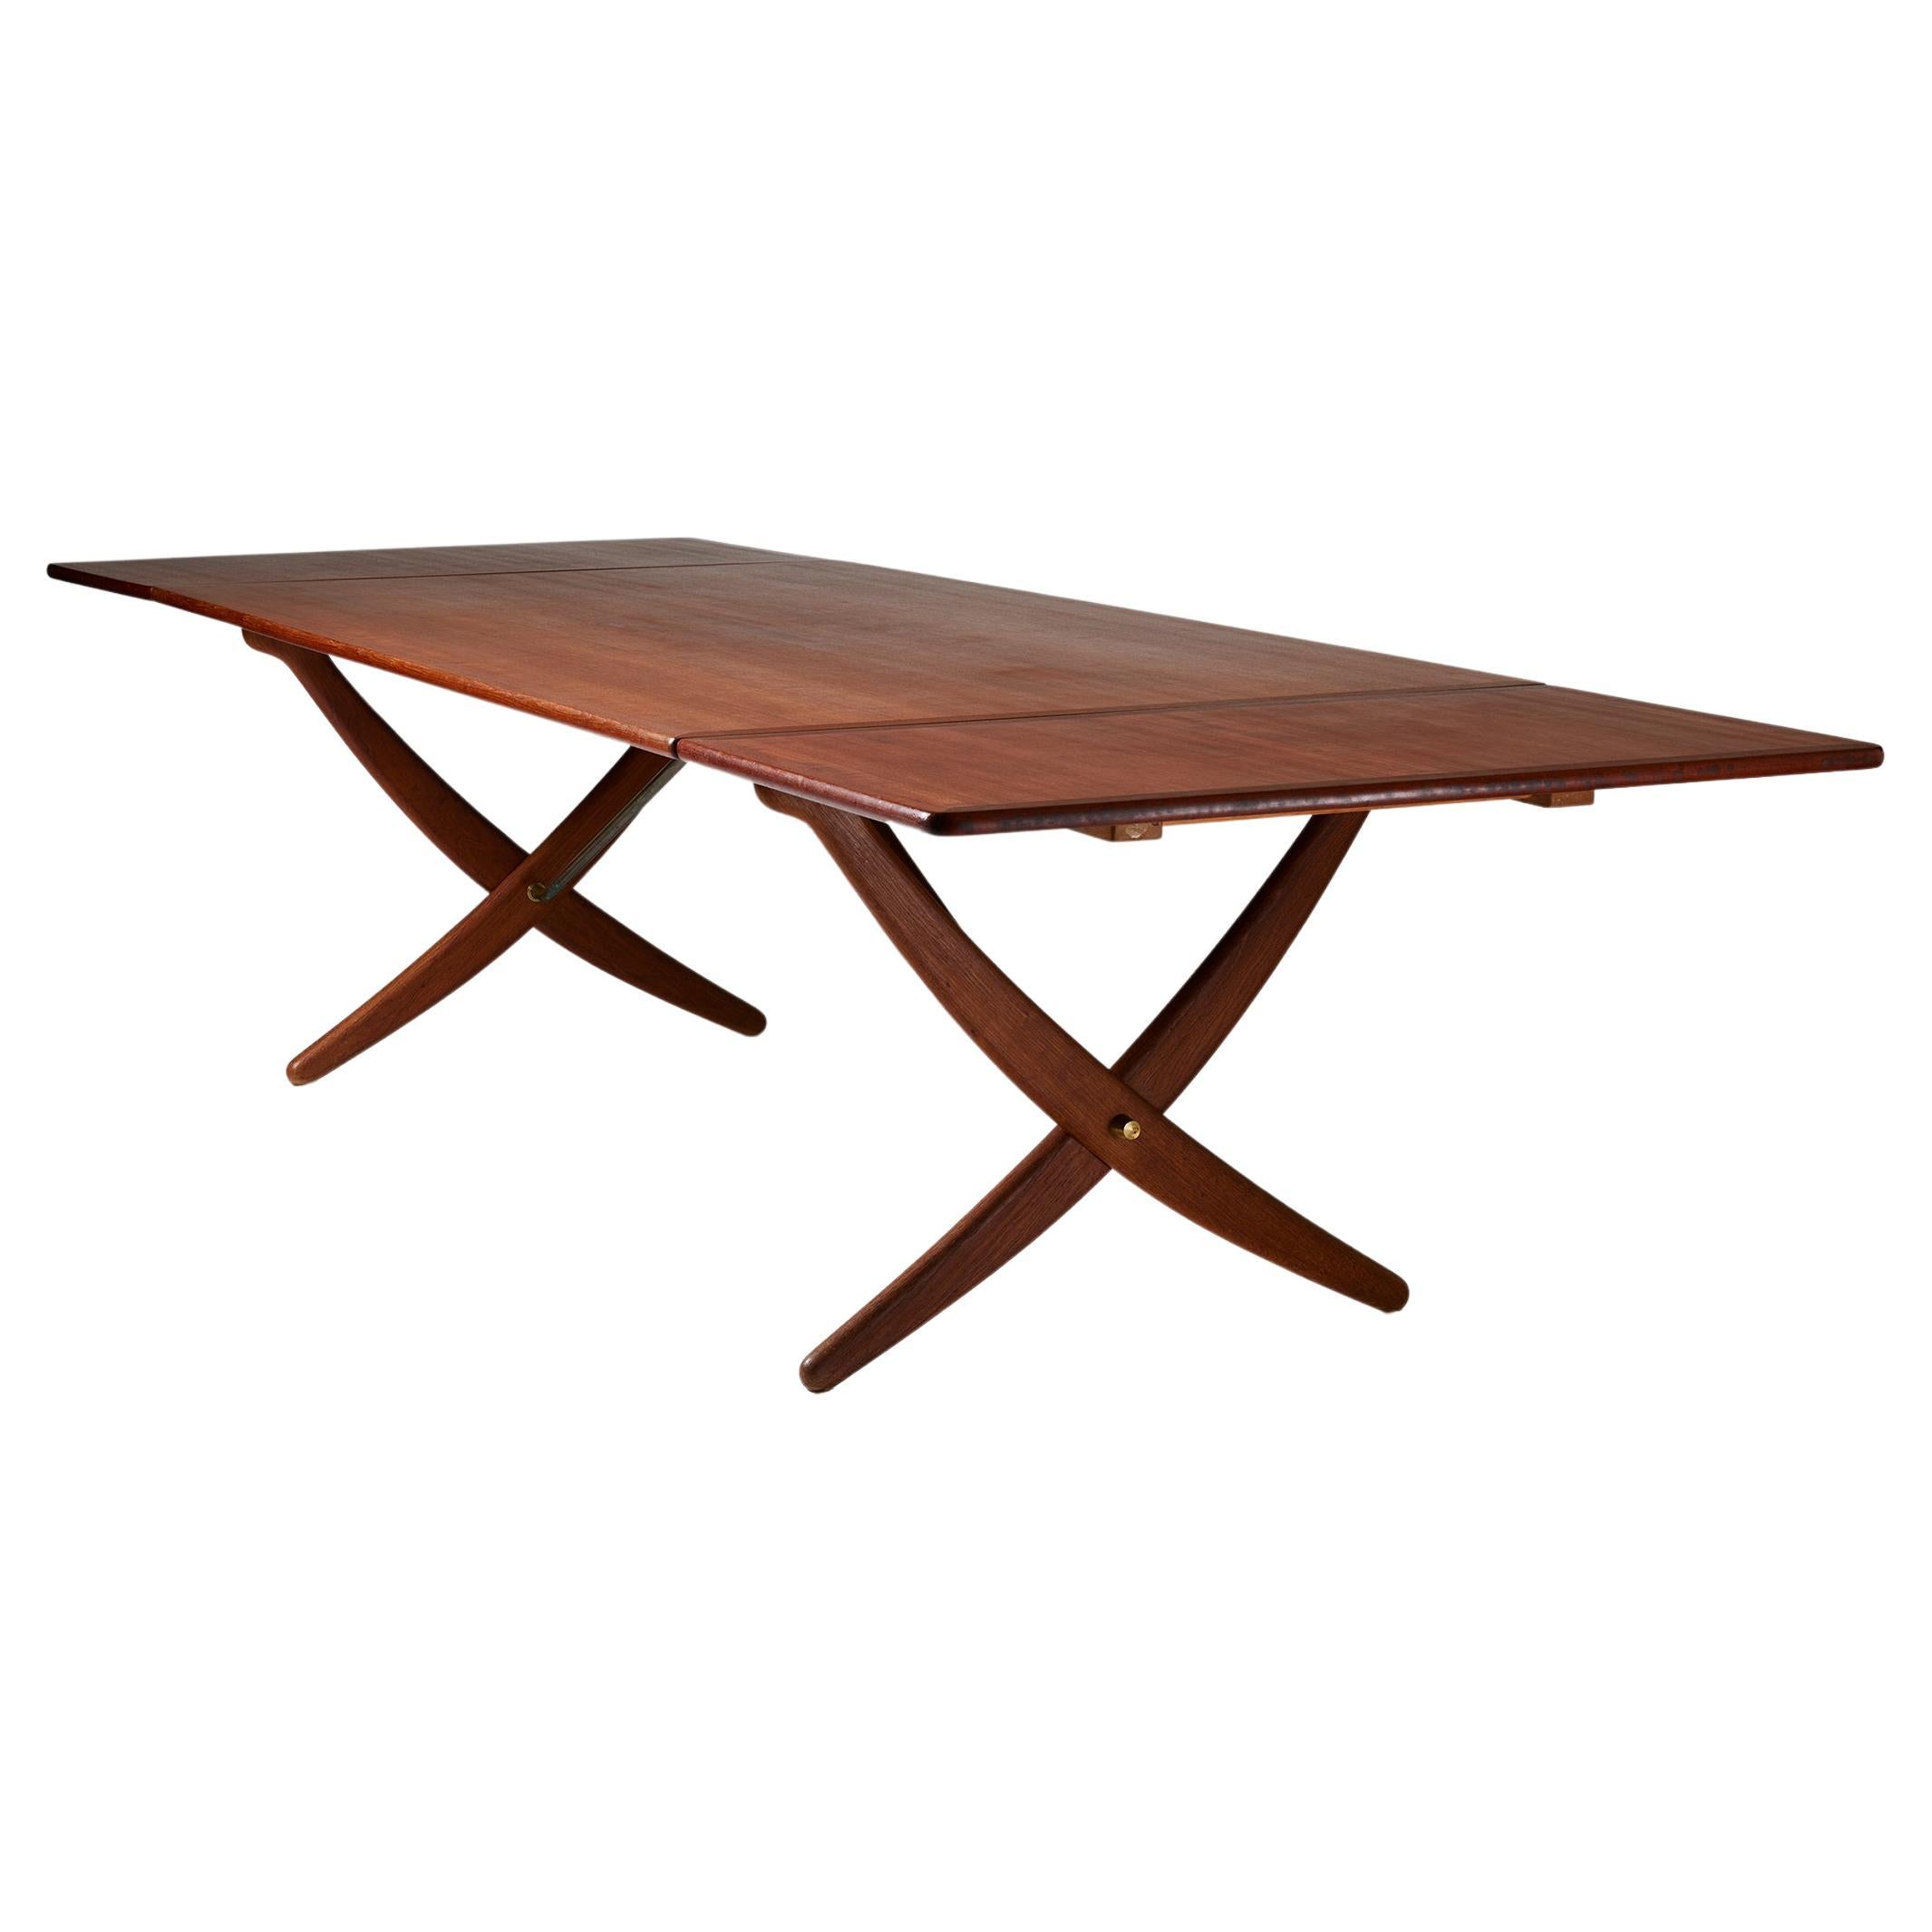 Dining table ‘Sabre Leg’ designed by Hans J. Wegner for Andreas Tuck, Denmark